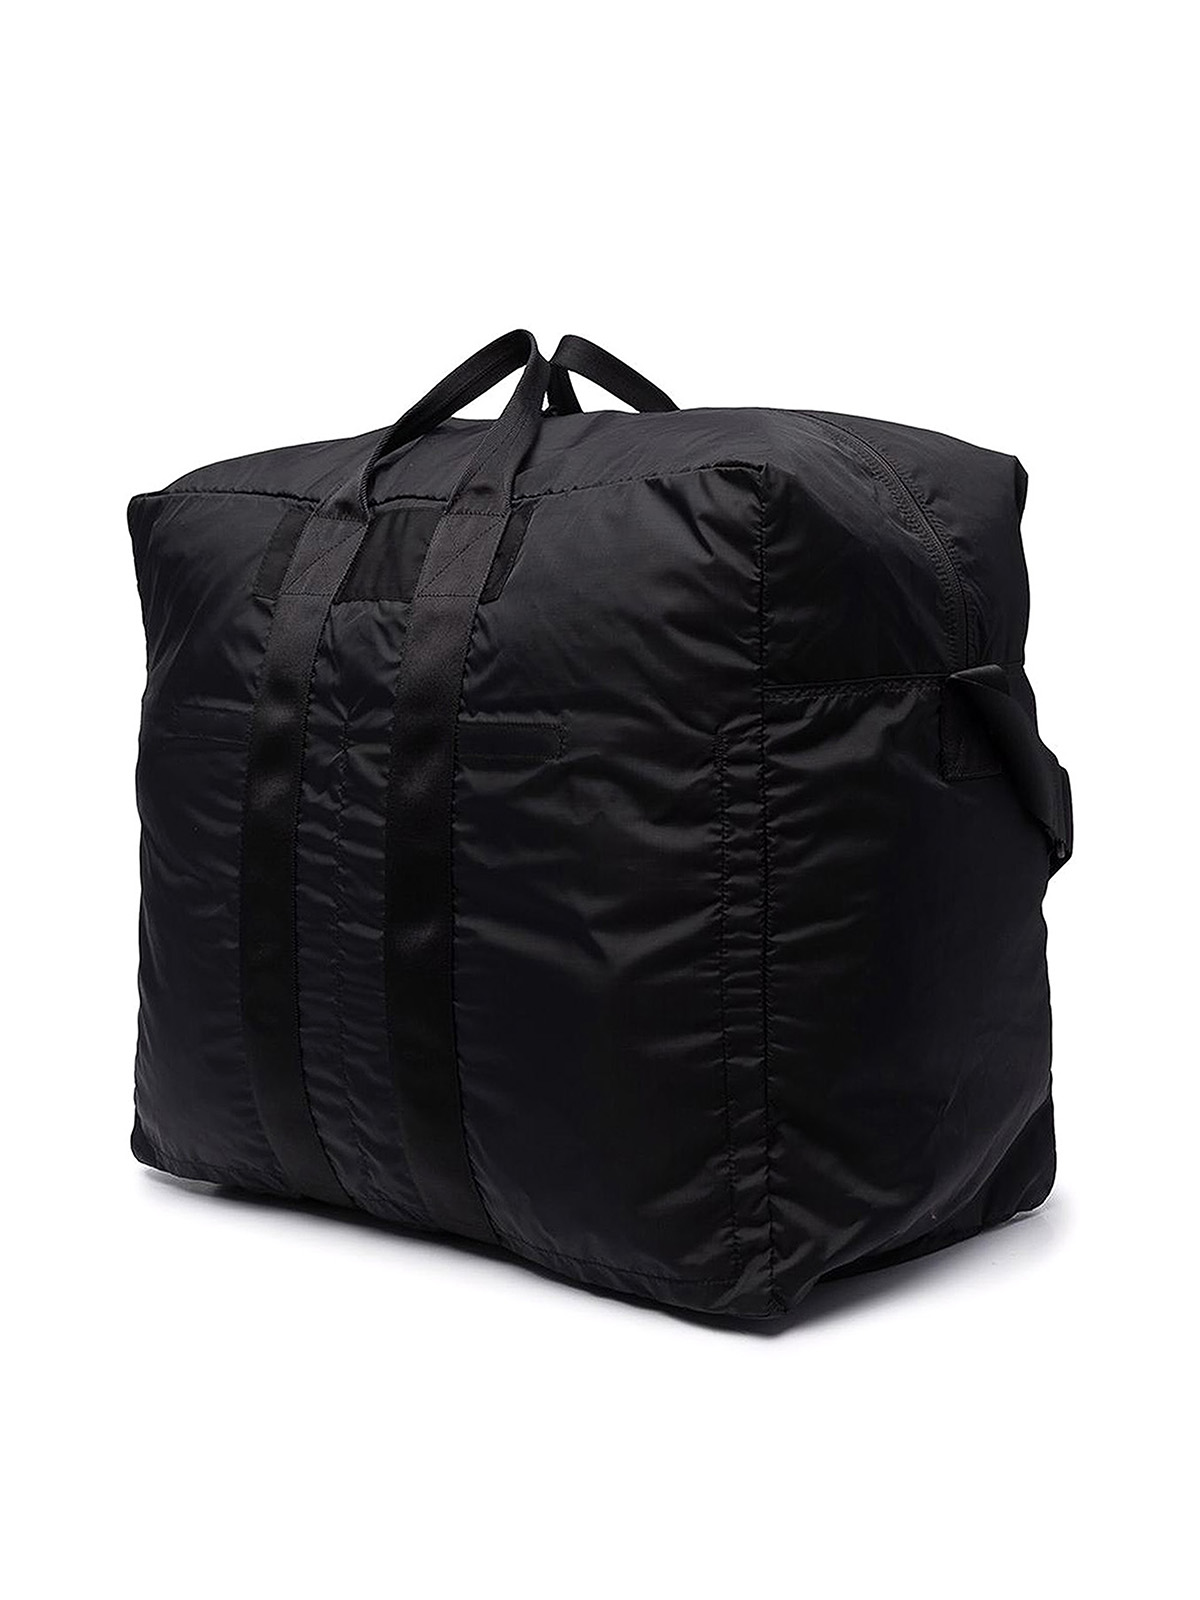 Luggage & Travel bags Porter-Yoshida & Co. - Tech fabric duffle bag -  8560741930